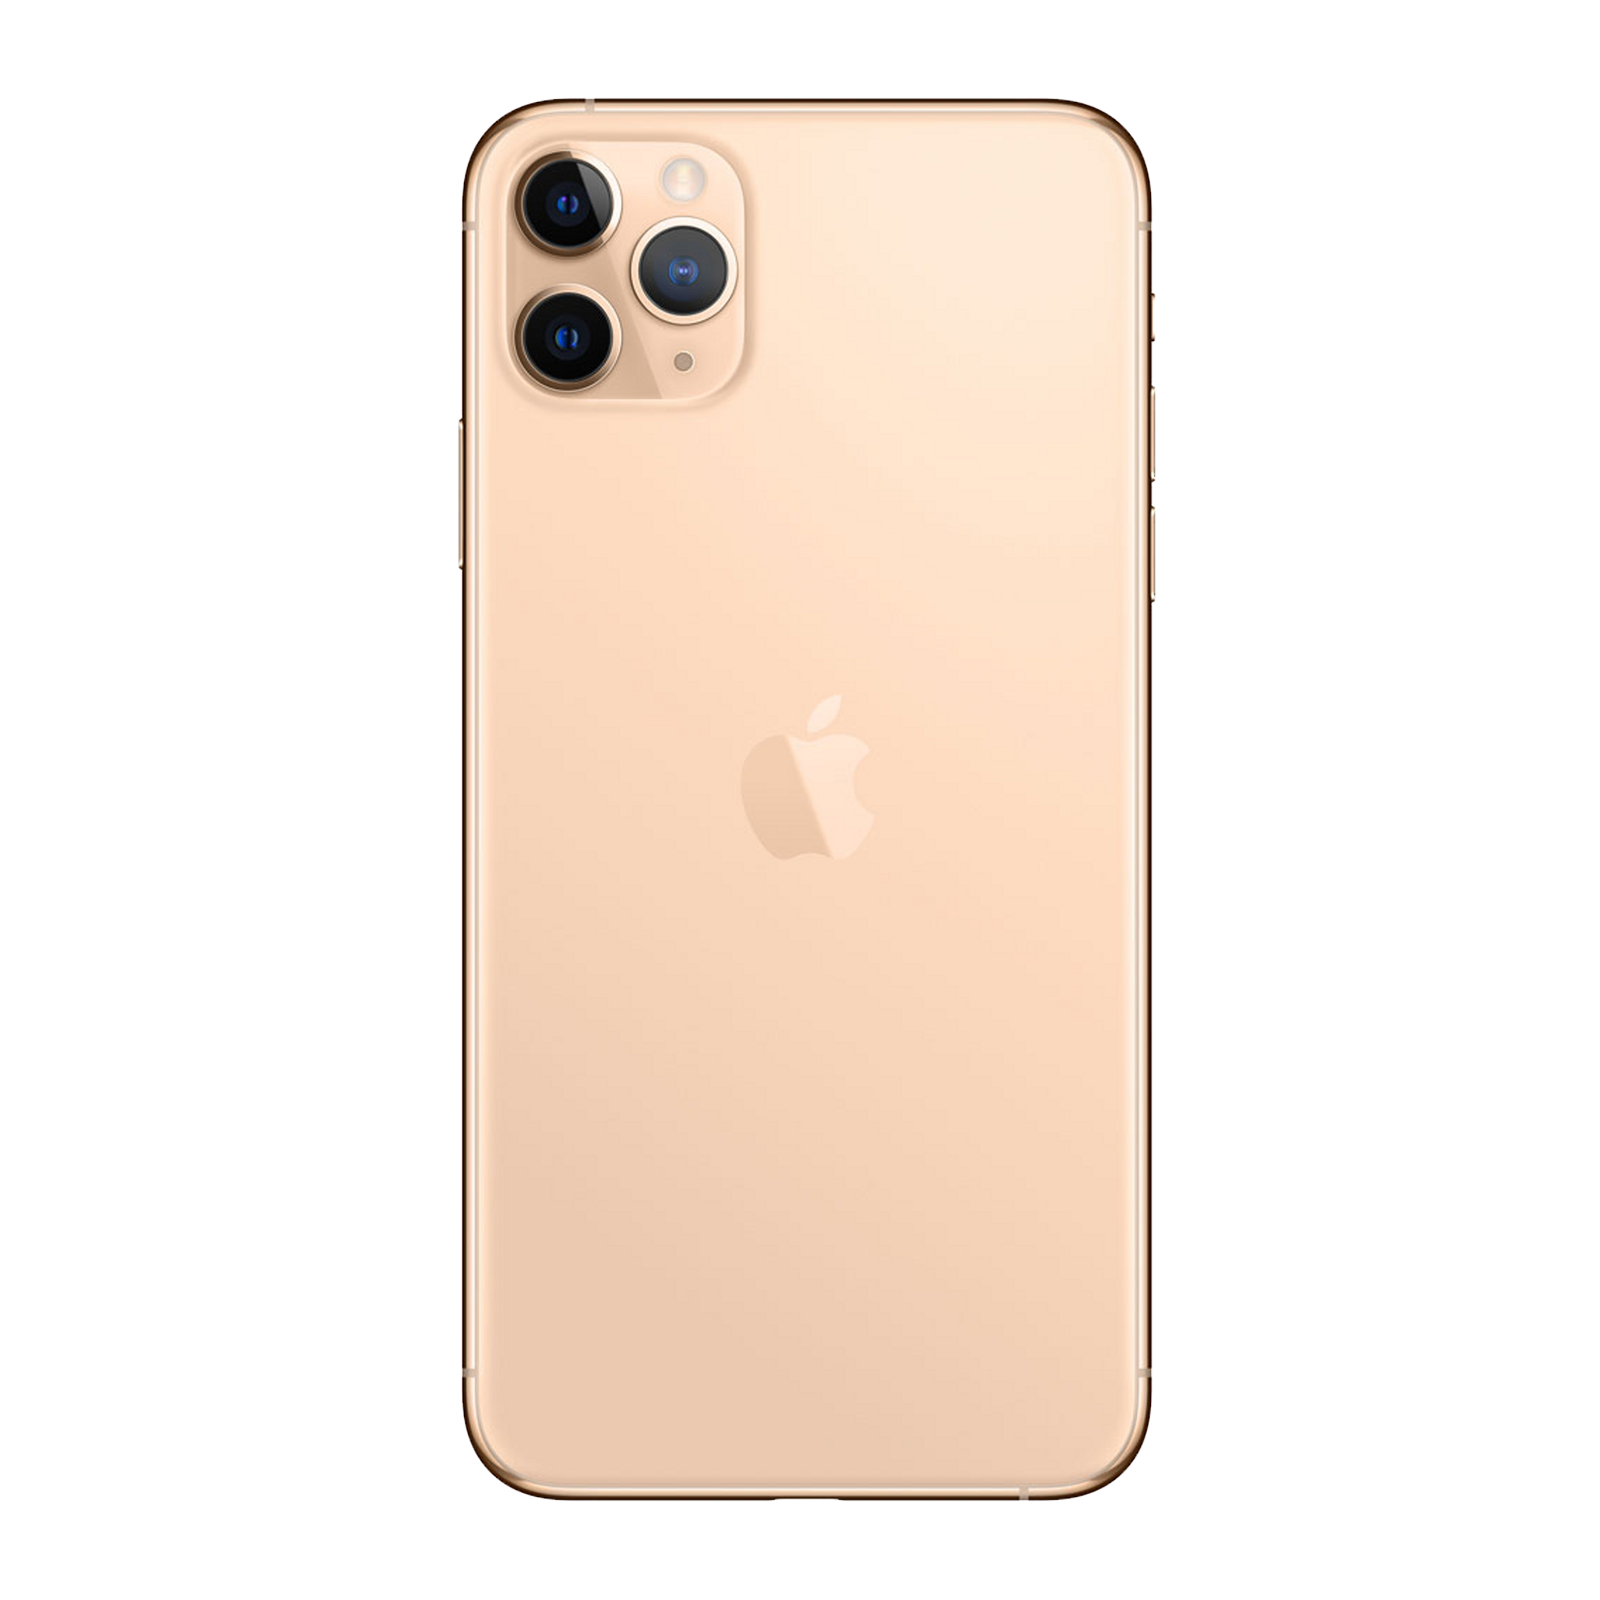 Apple iPhone 11 Pro Max 512GB Gold Very Good - Sprint